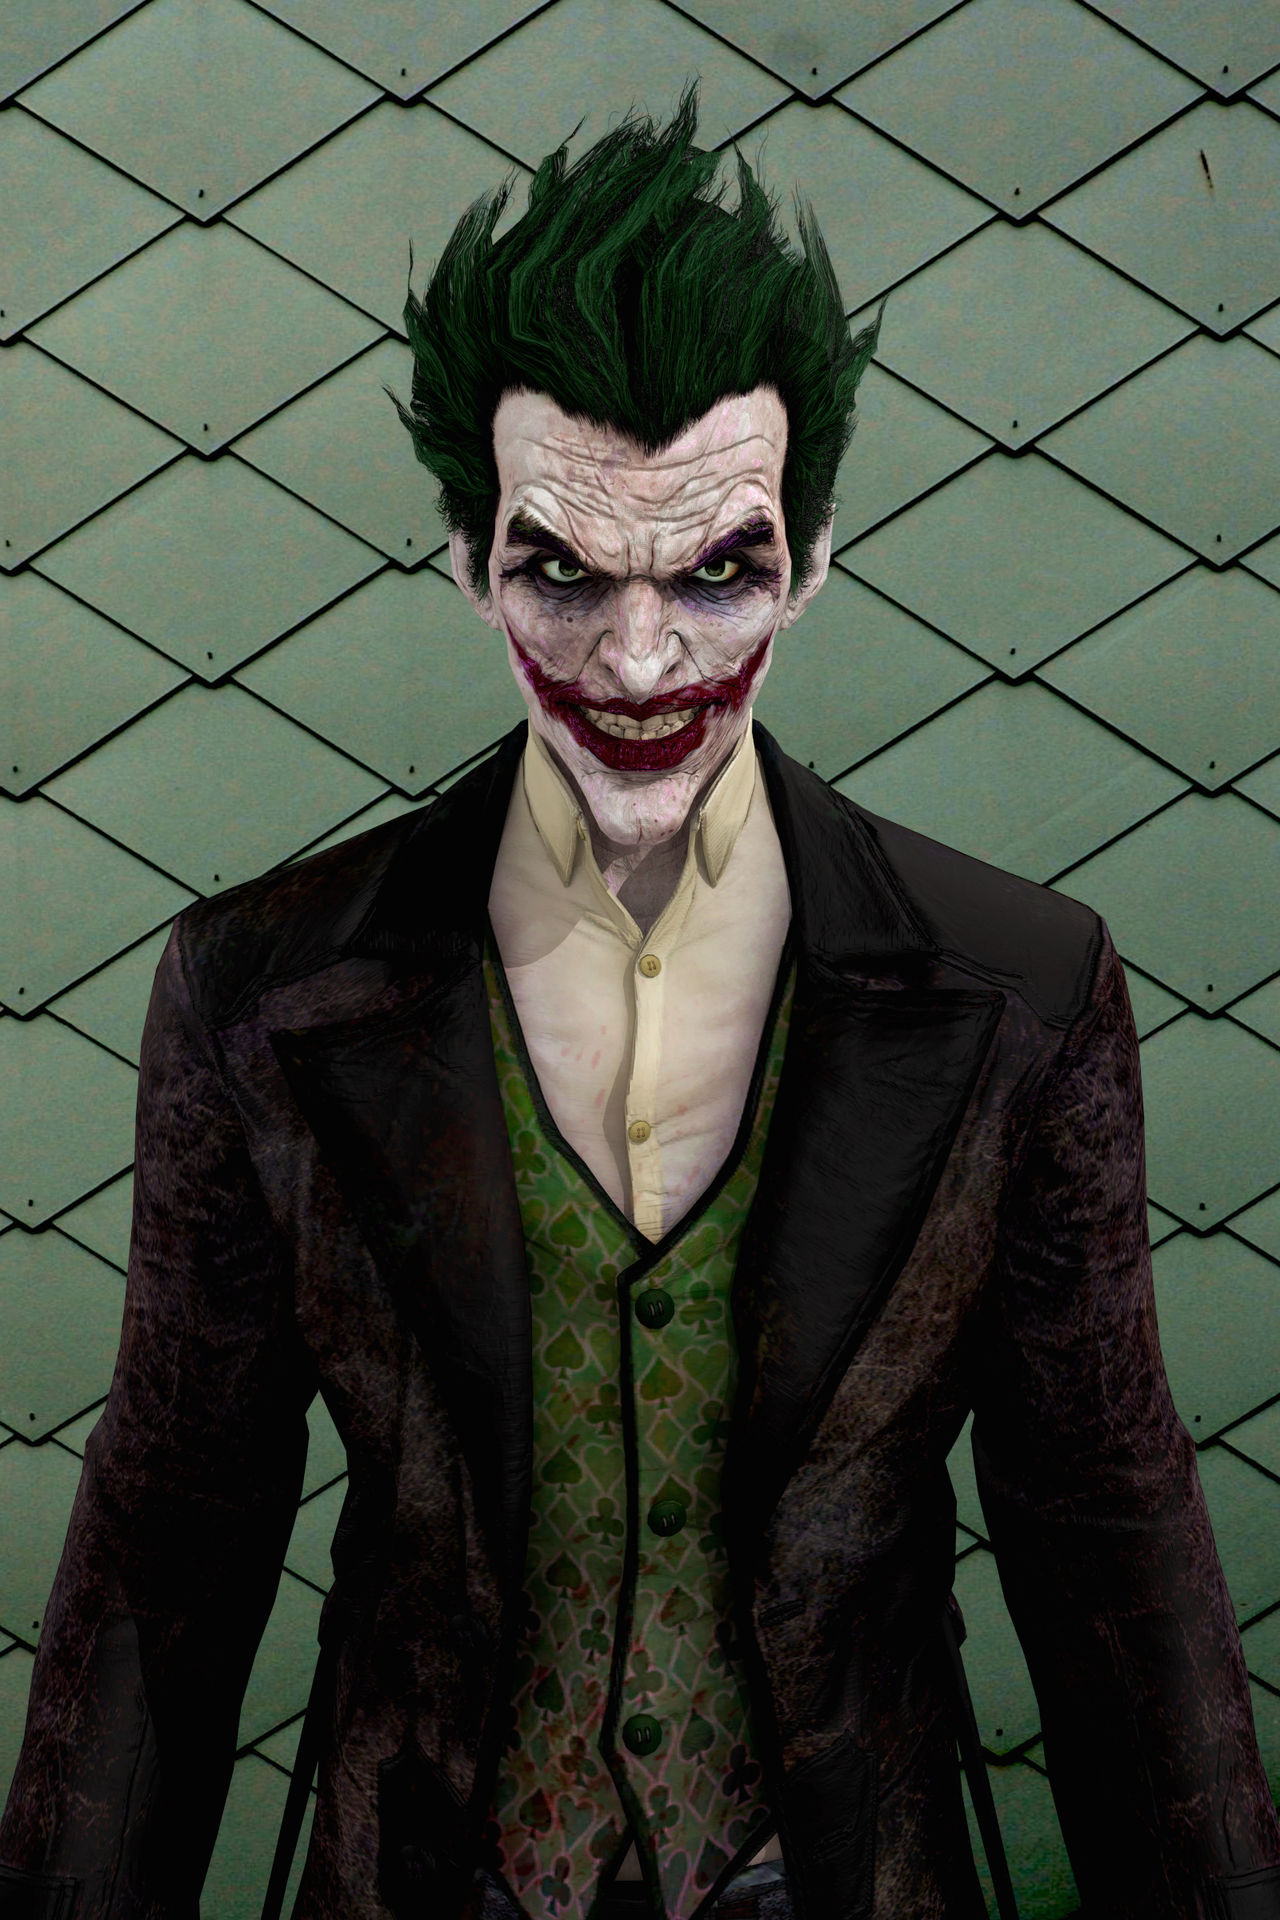 Batman Arkham Origins - The Joker by IshikaHiruma on DeviantArt